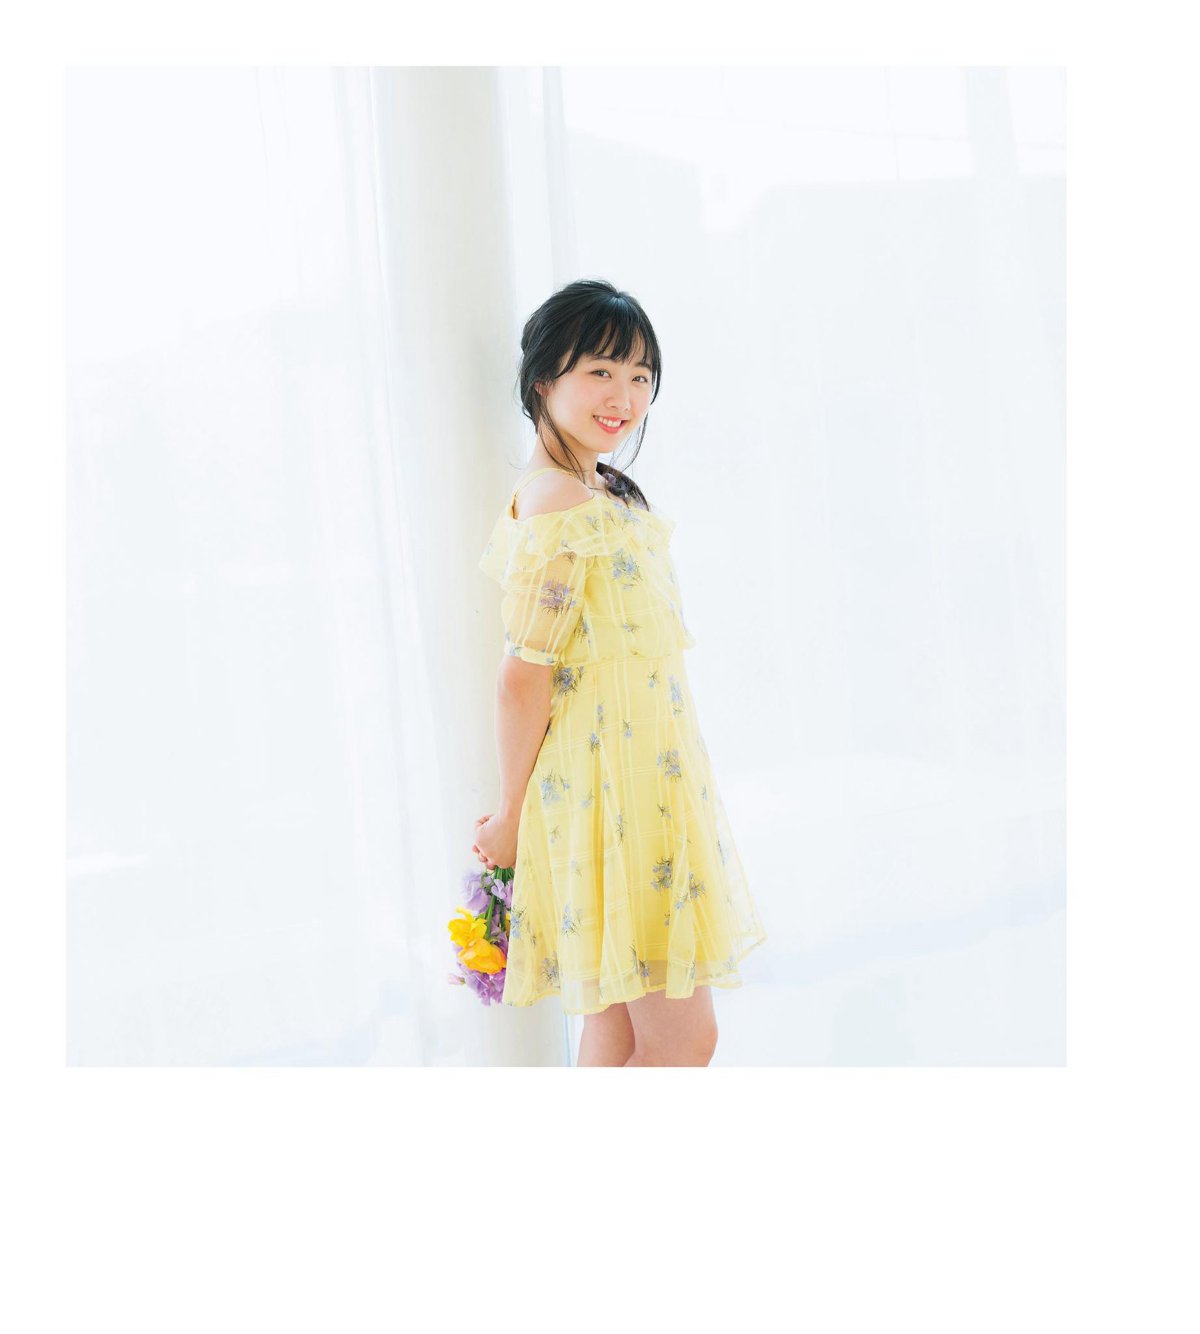 Photobook Miyu Honda 本田望結 JUNIOR HIGH SCHOOL DAYS 2020 04 30 0035 7579009465.jpg